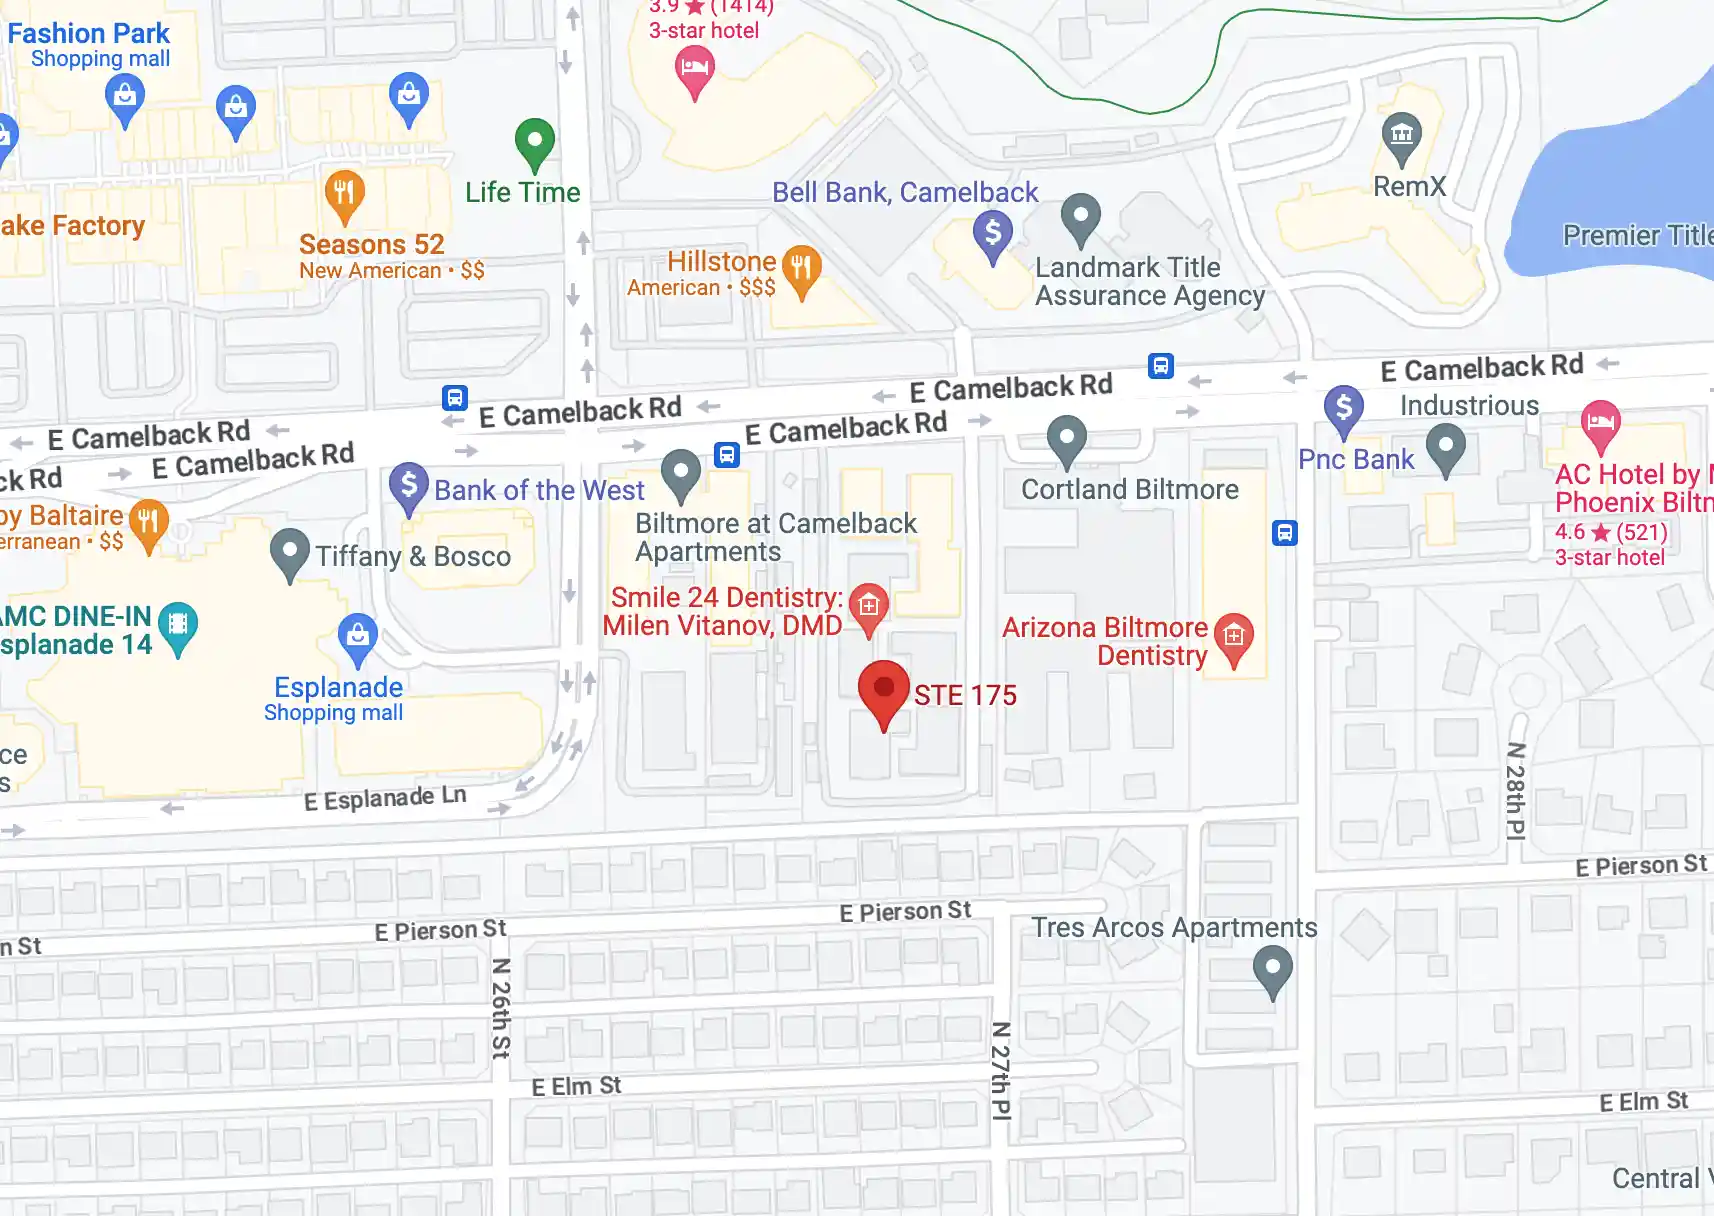 A google map of Phoenix location